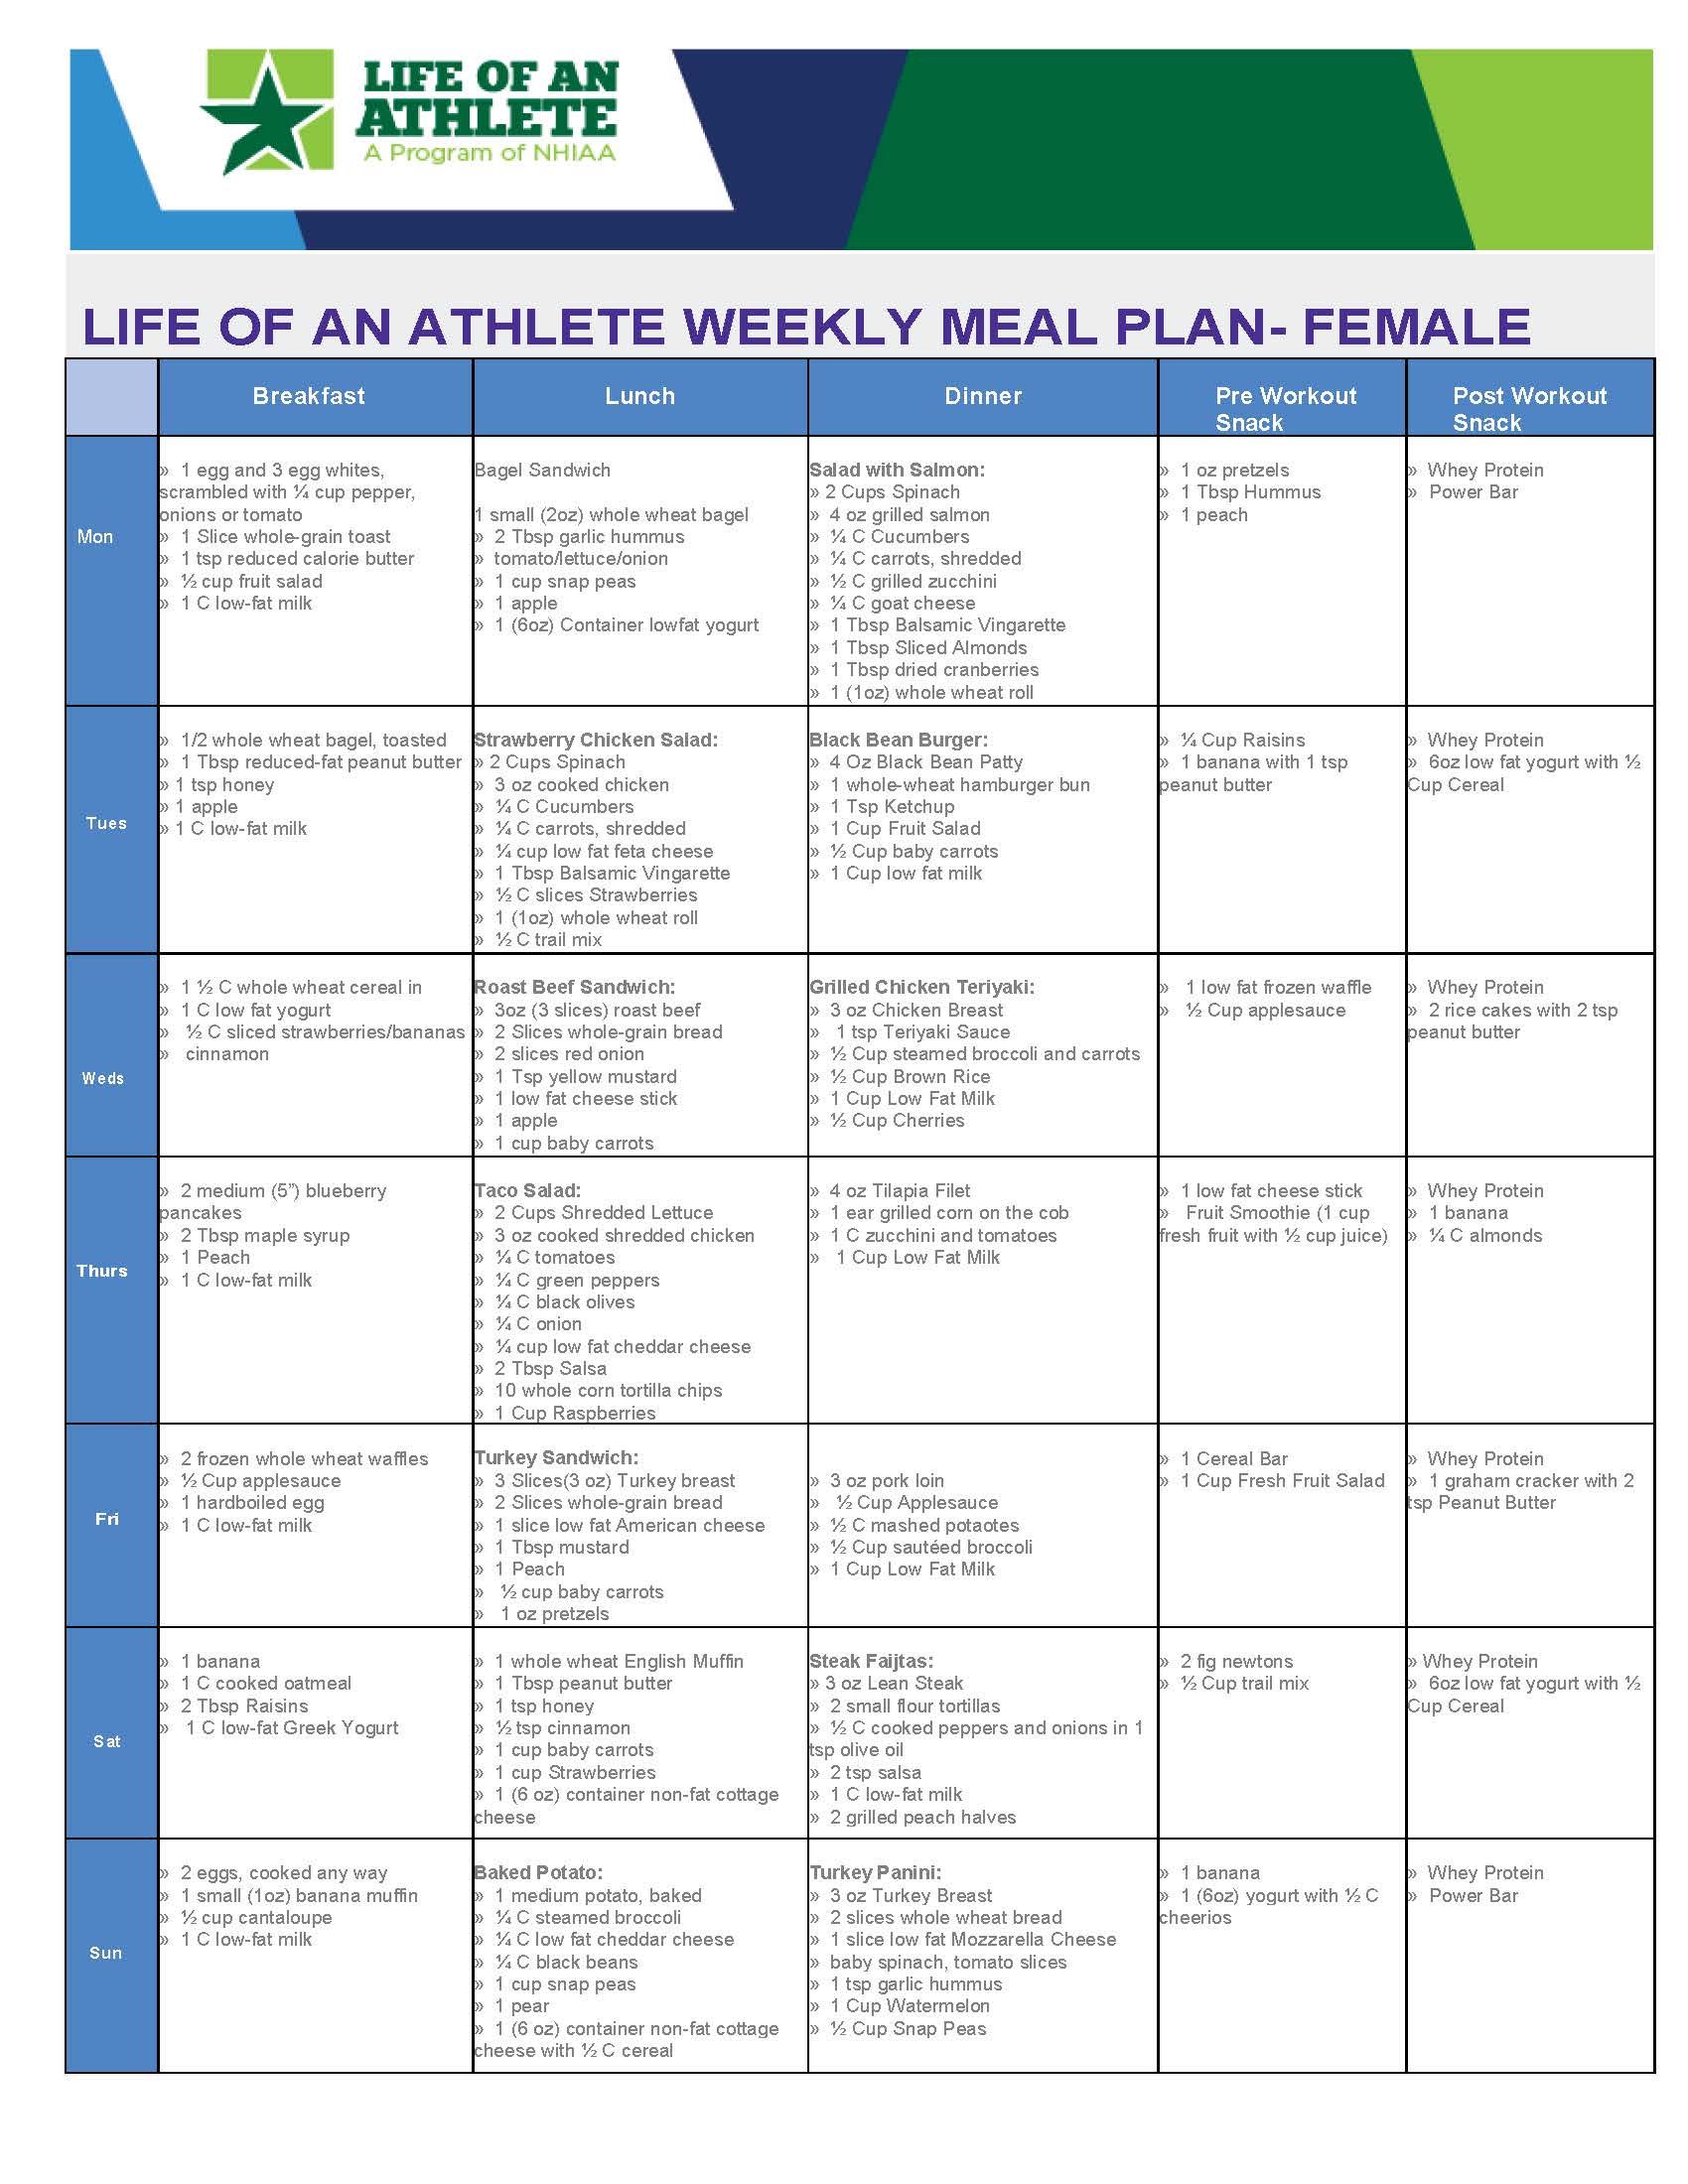 Female Athlete Meal Plan